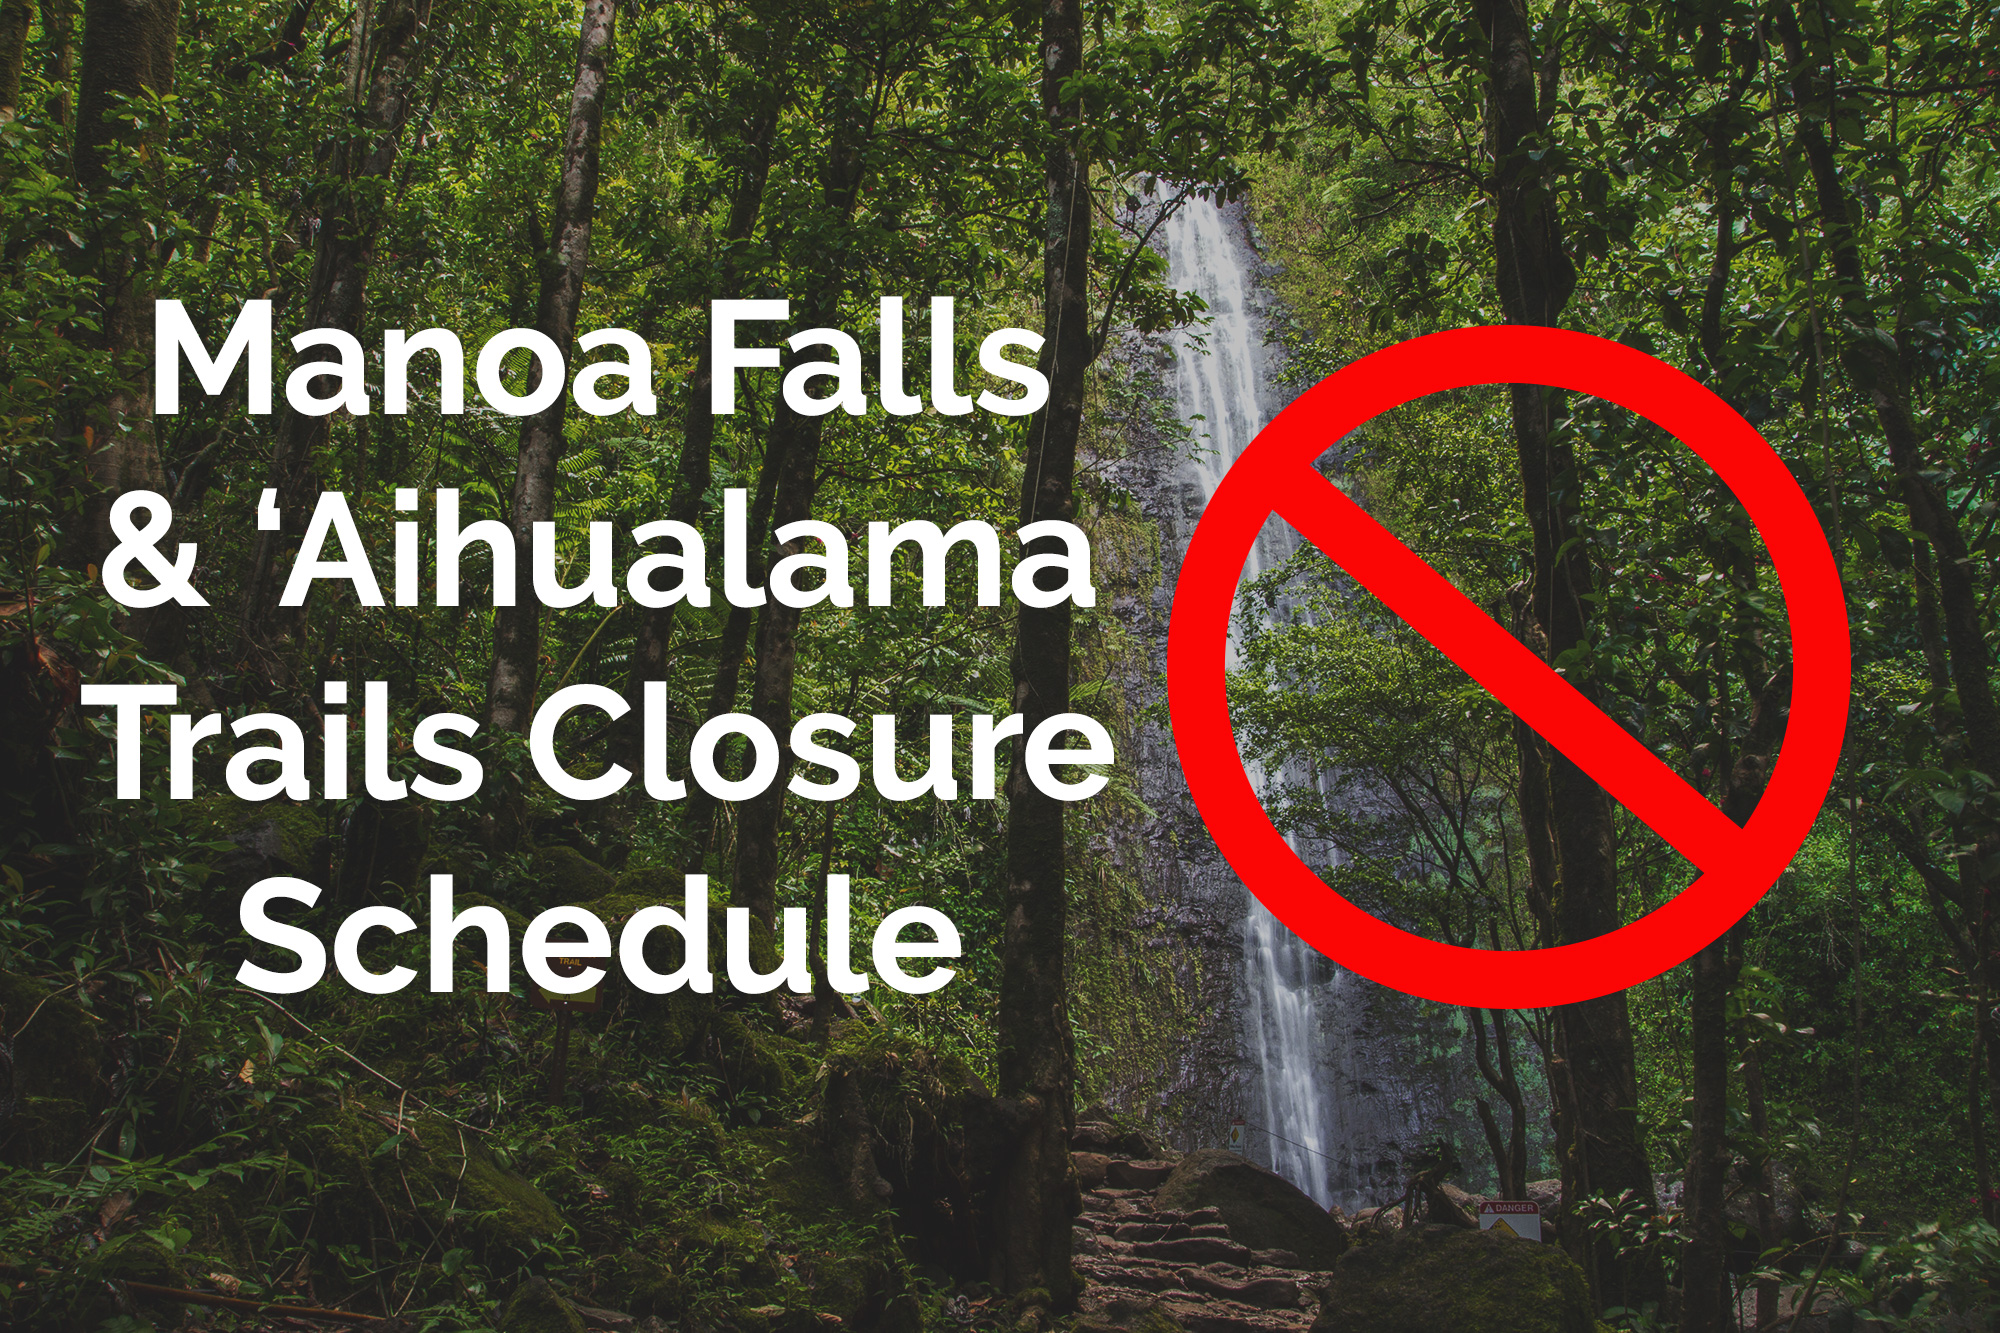 Manoa Falls and ‘Aihualama Trails Closure Schedule